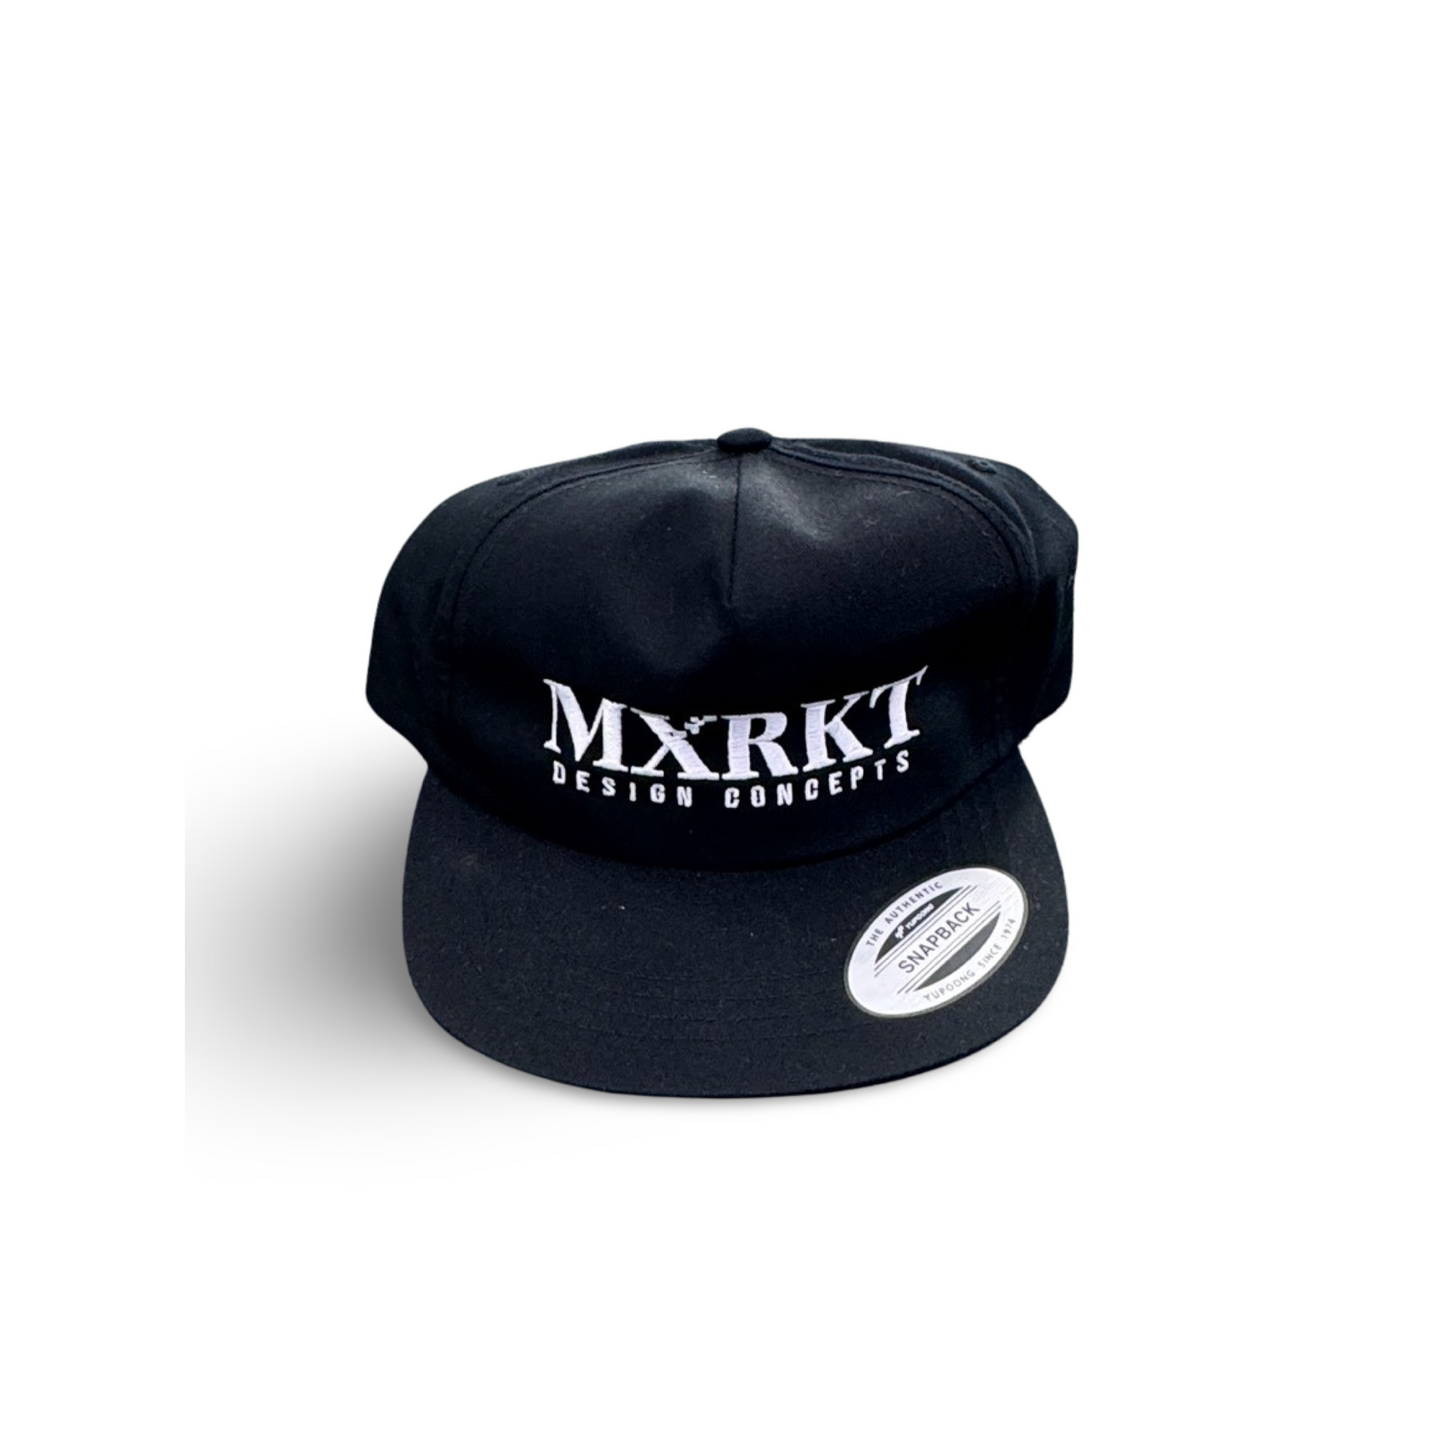 Mxrkt Design Concept Hat